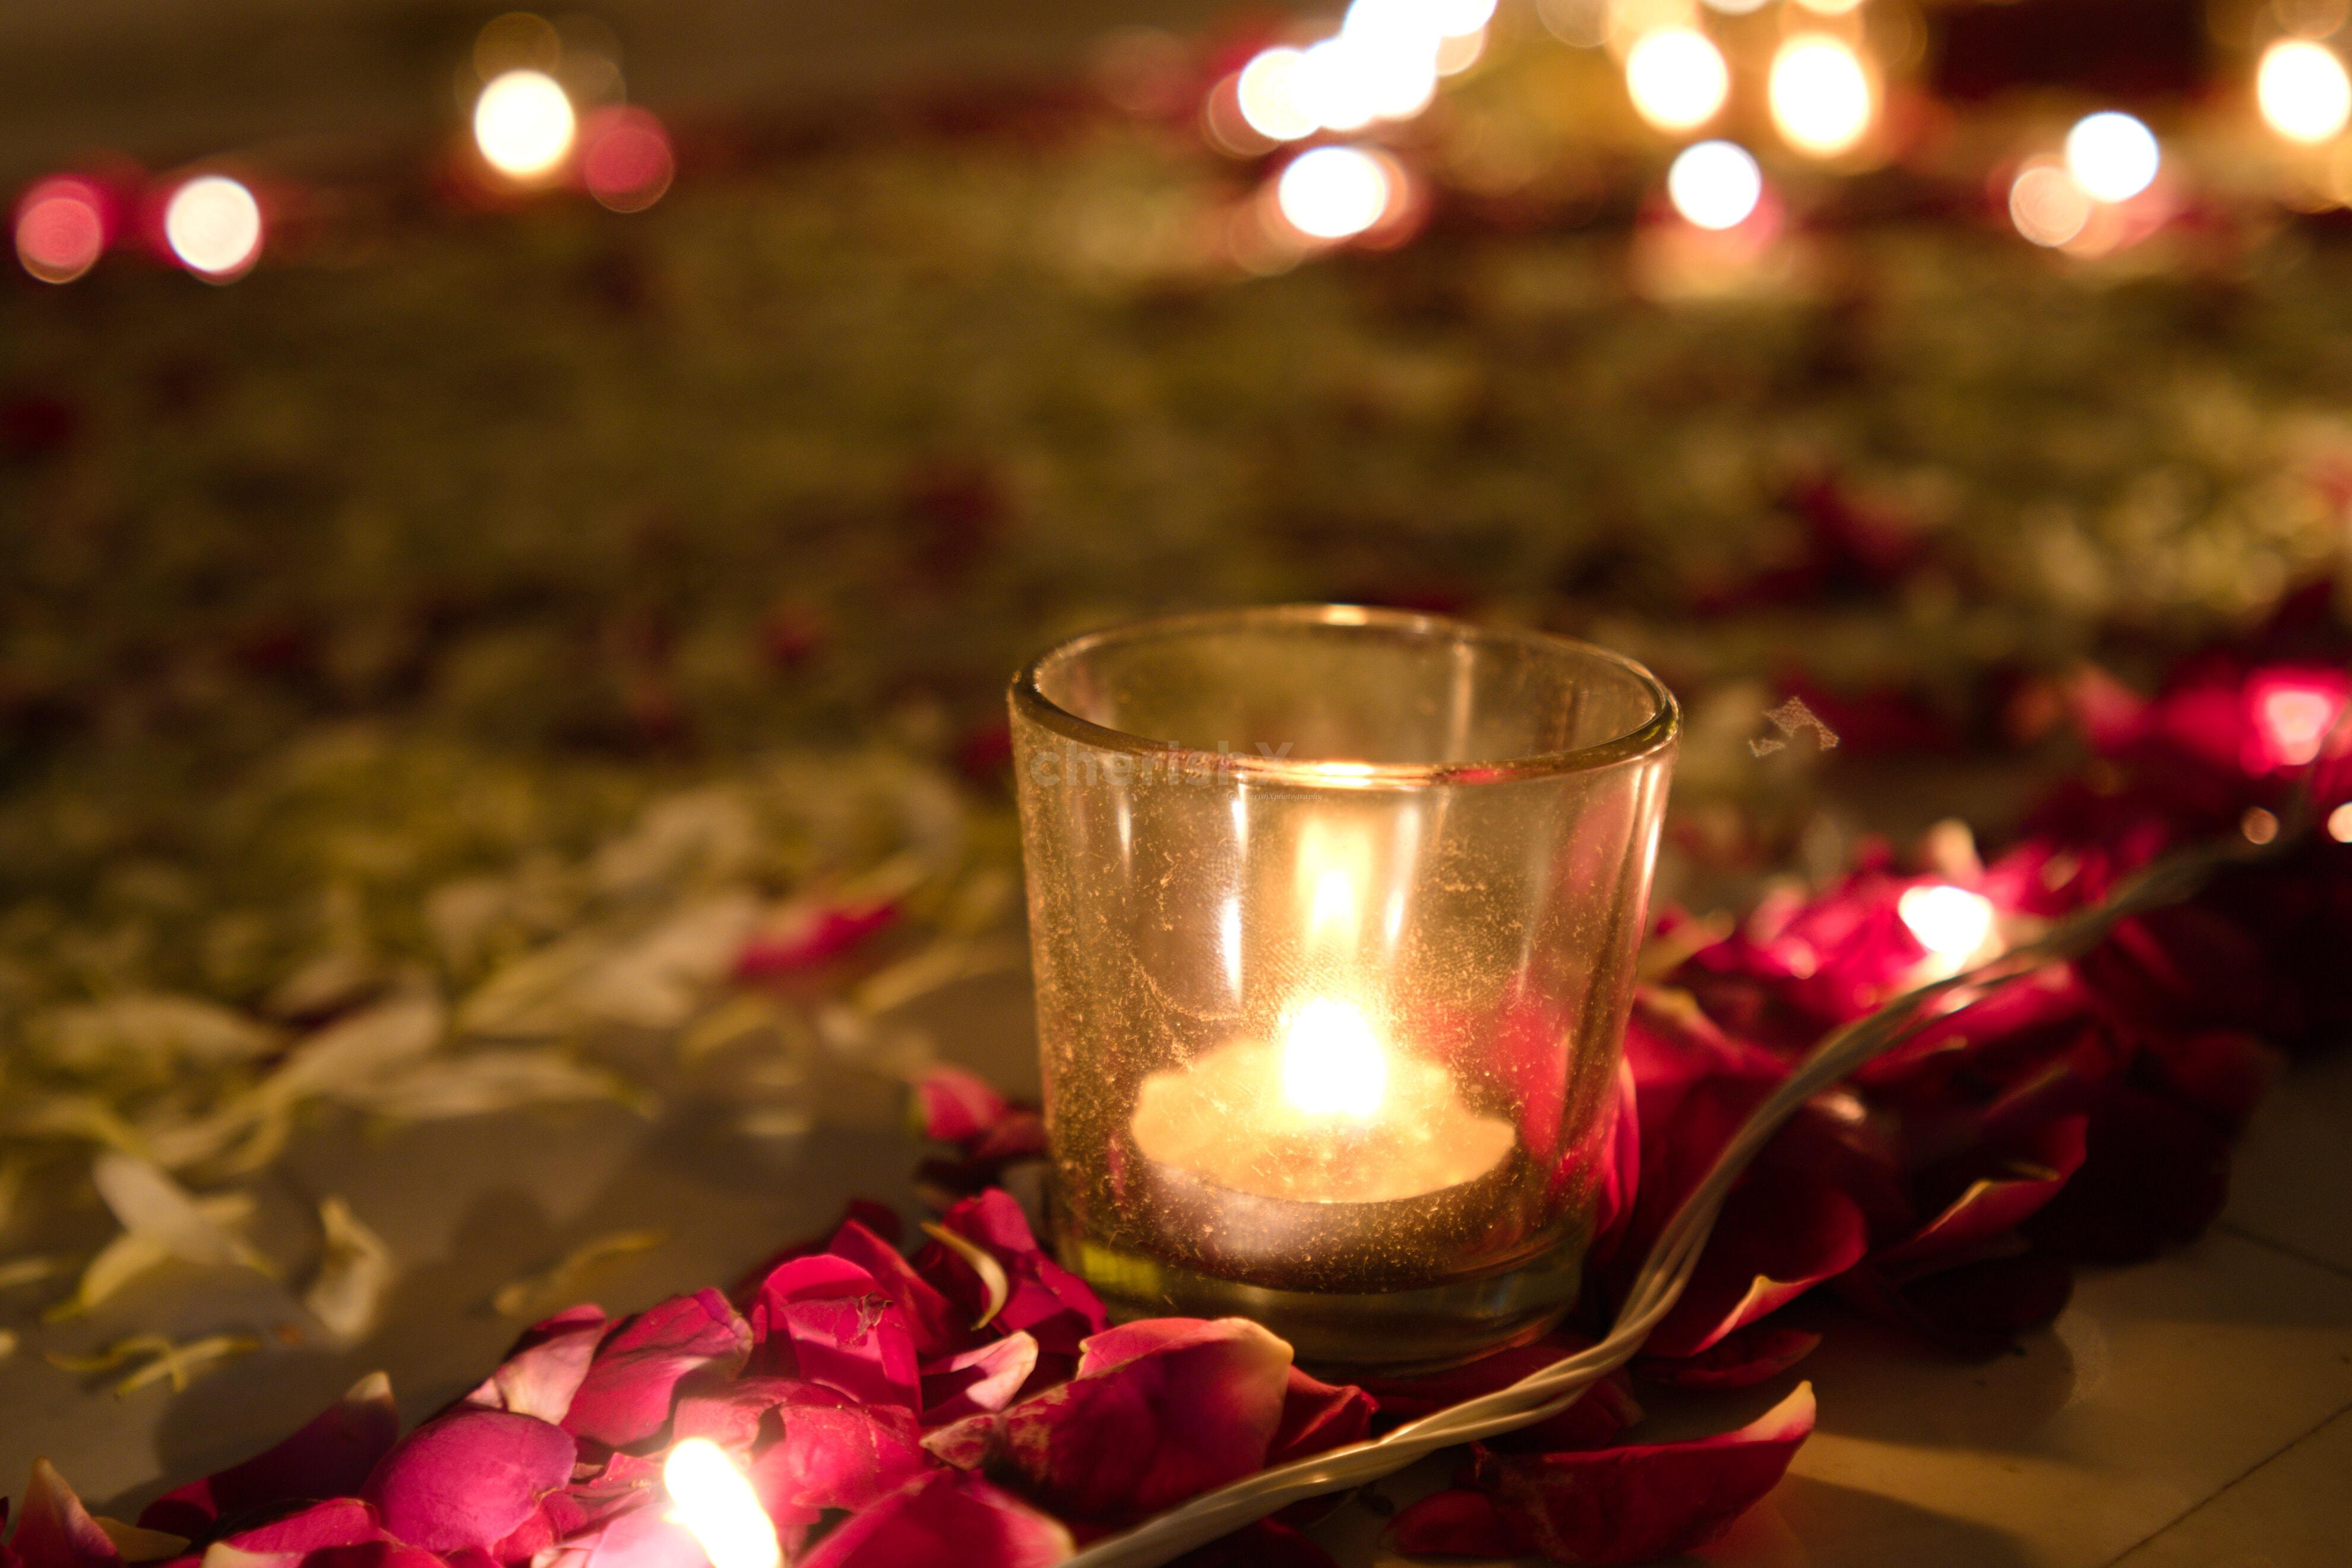 Candles & Flower Petals Decor-Proposal setup